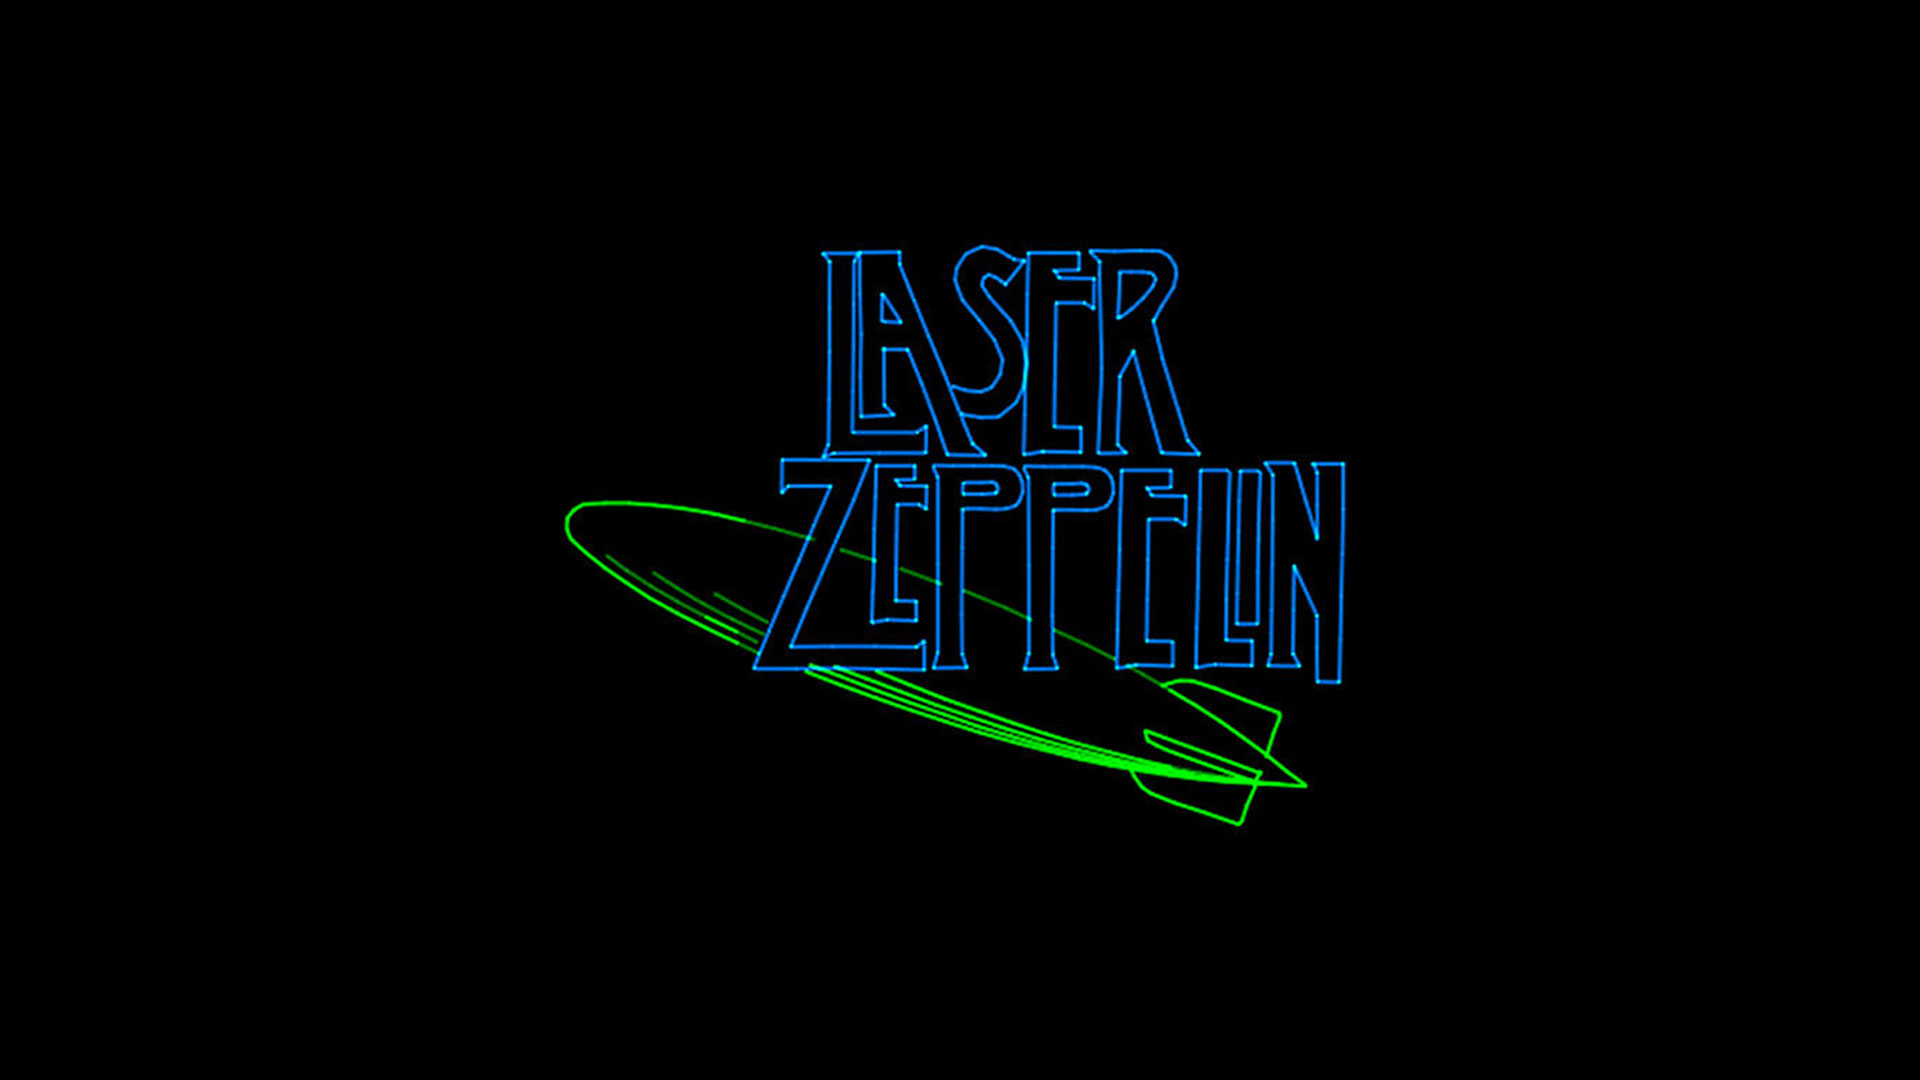 Laser Zeppelin